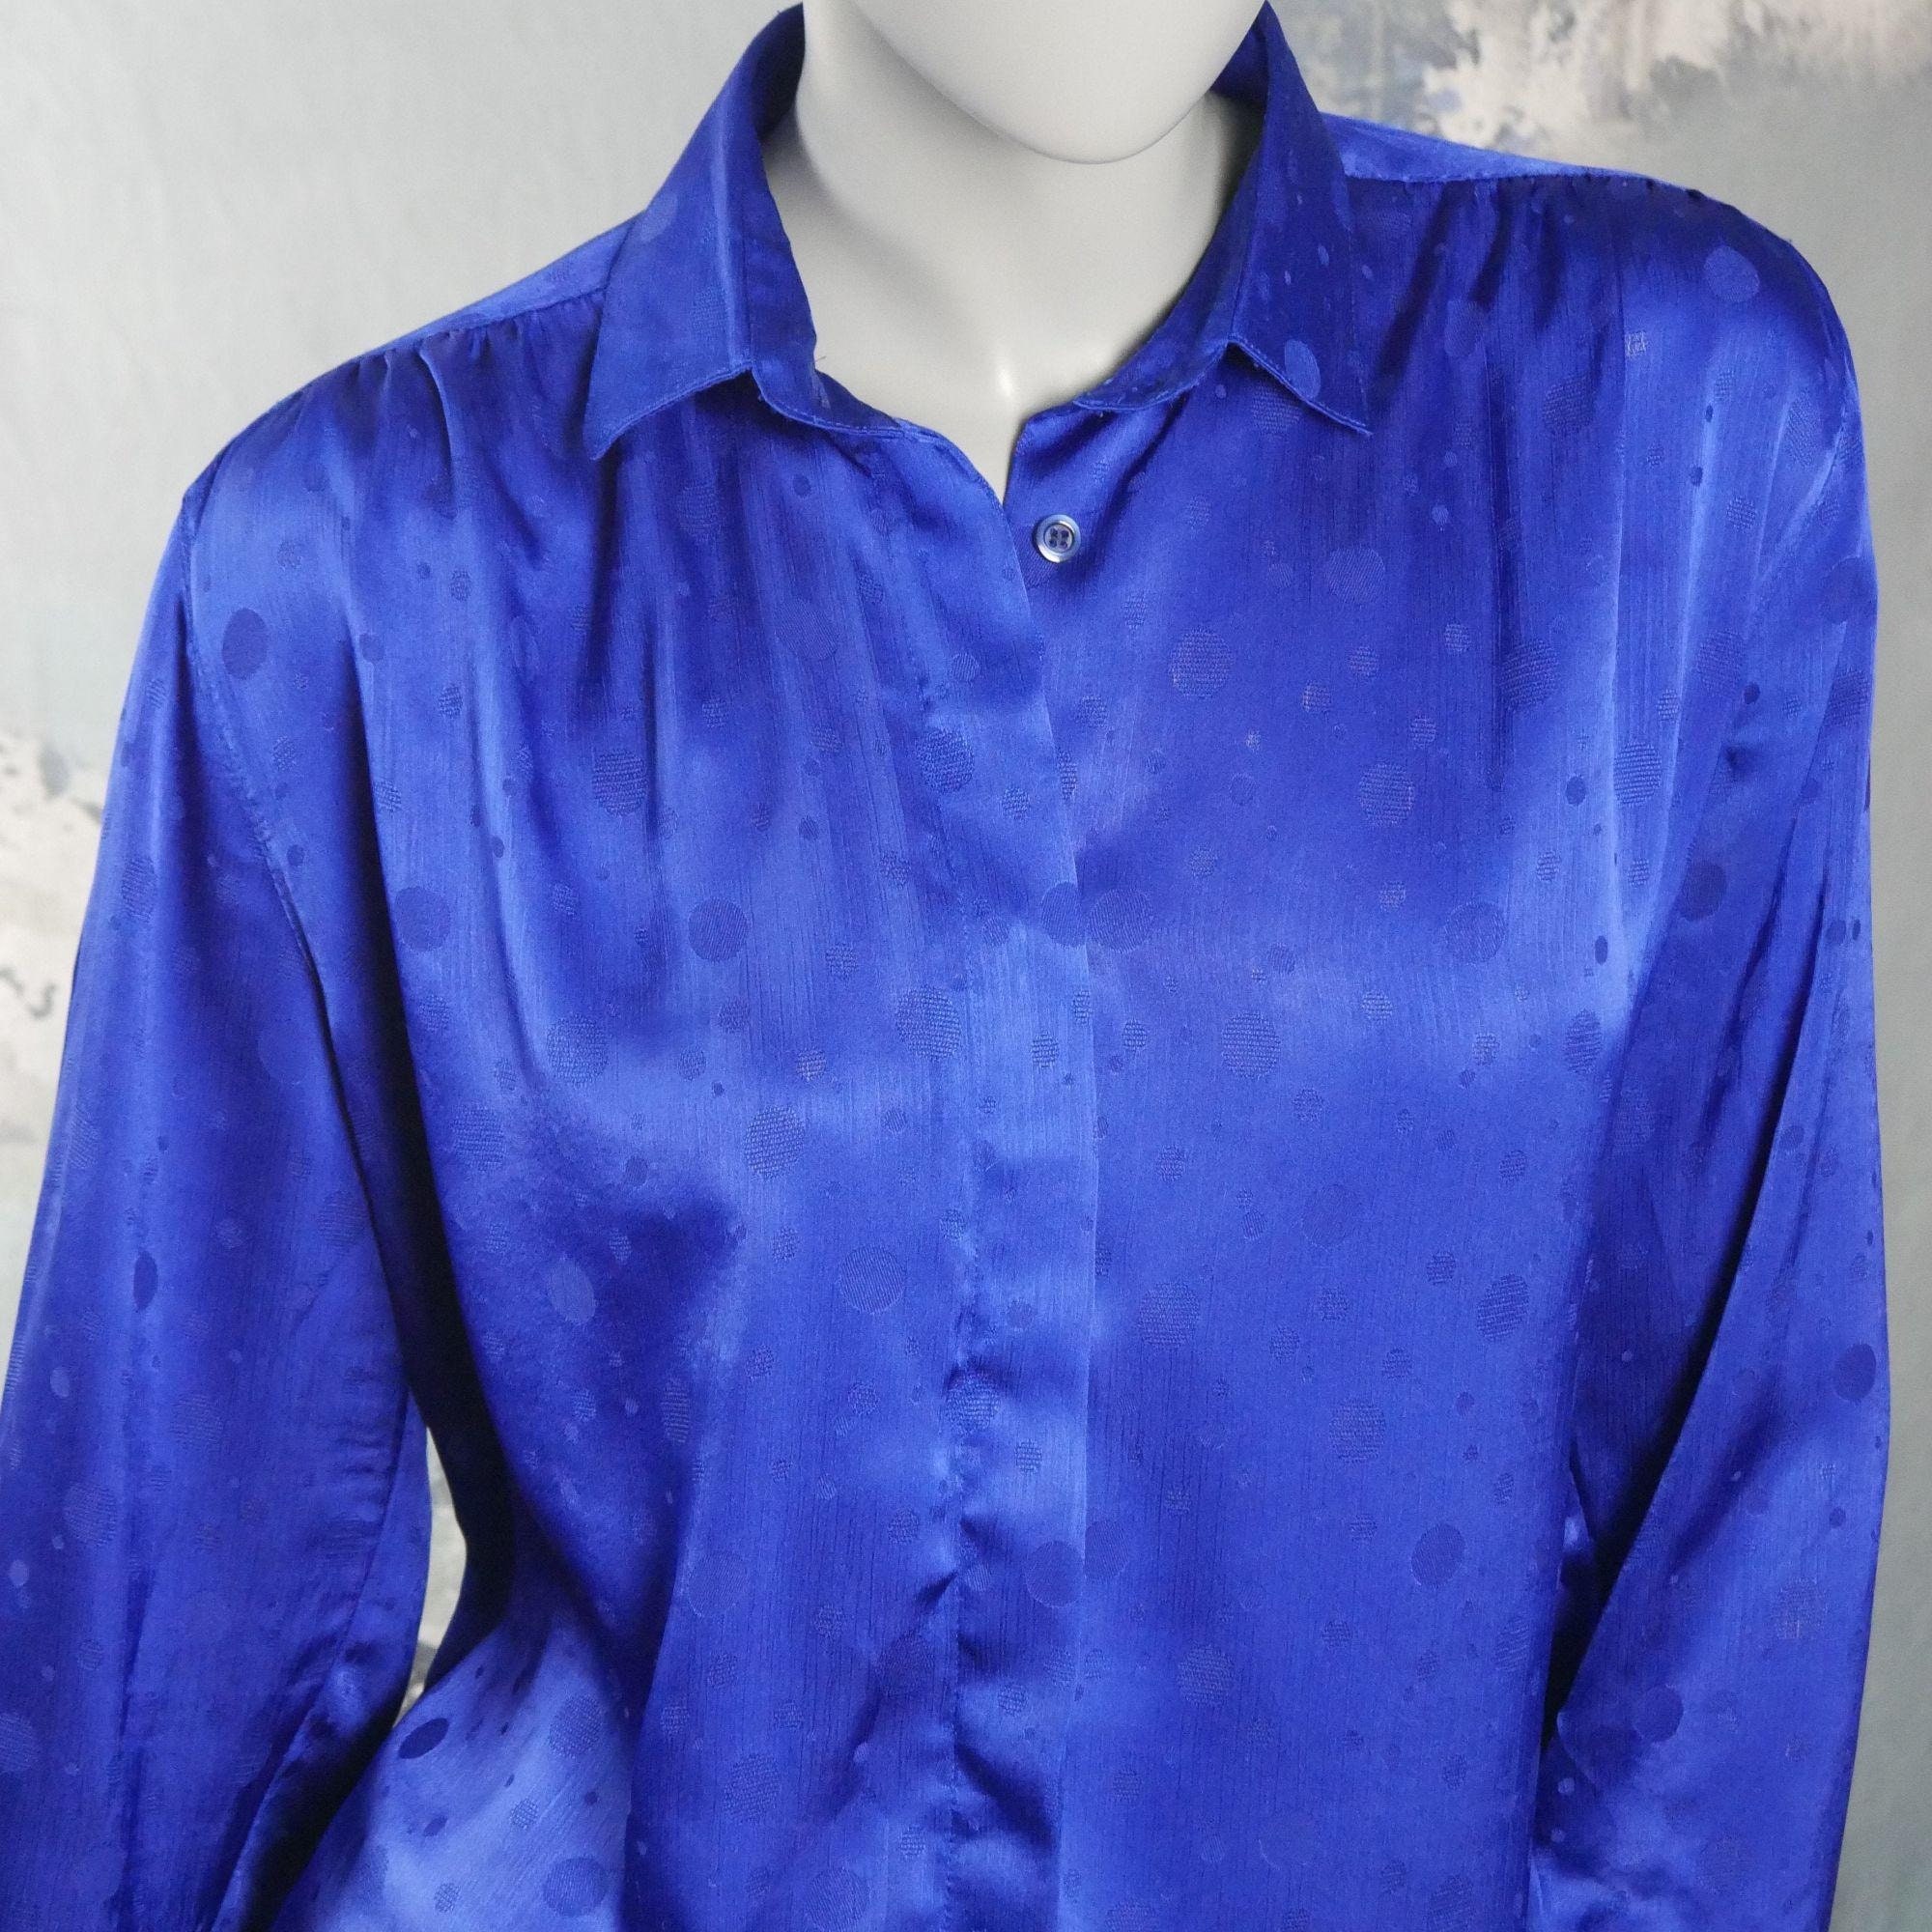 Blue Satin Blouse 90s Vintage Long-sleeve Shirt Style Top | Etsy